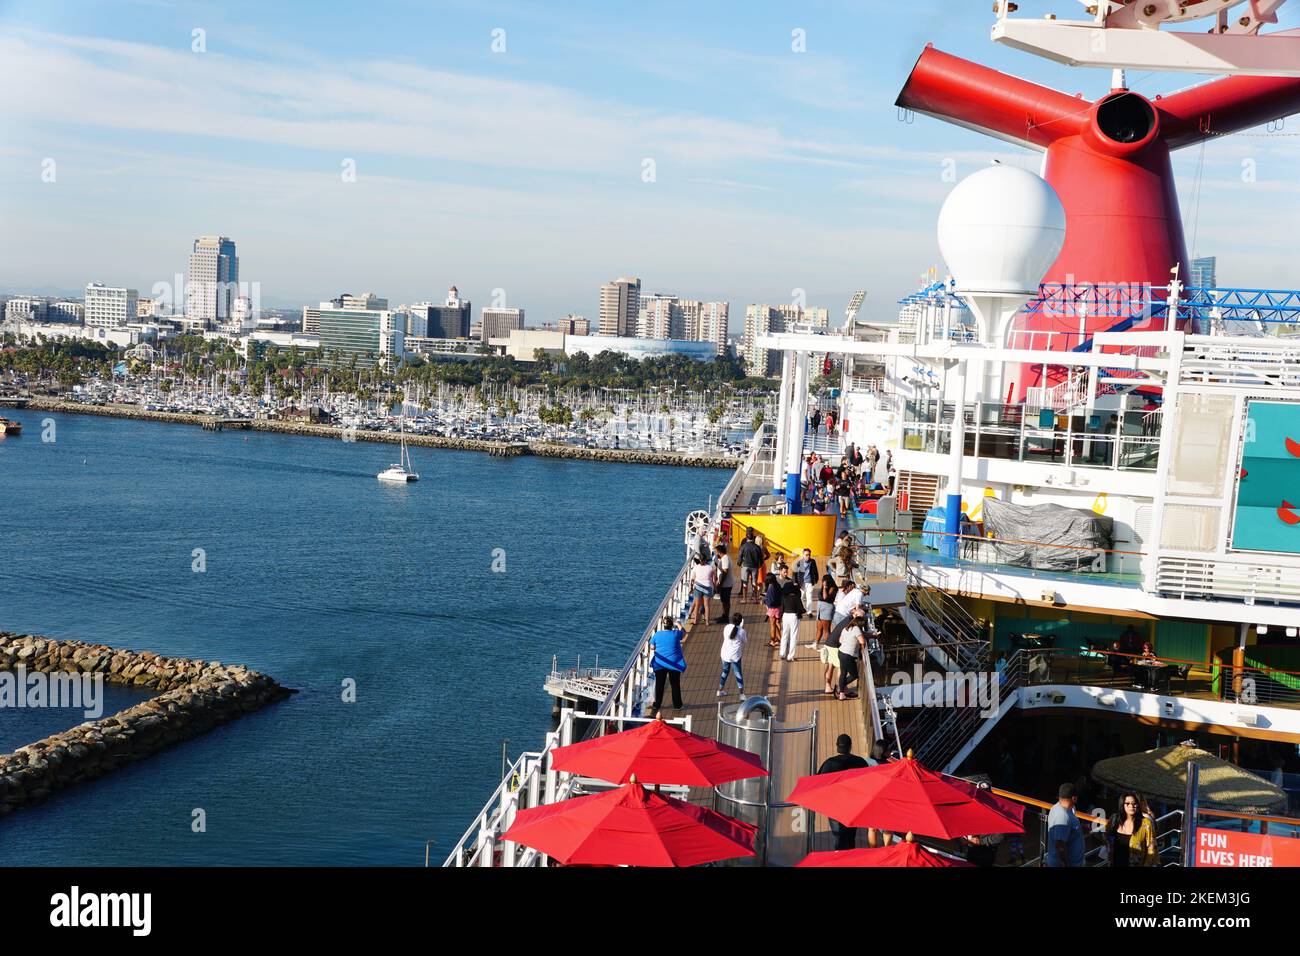 Long Beach Carnival Cruise Line Terminal - AudioVisual Company